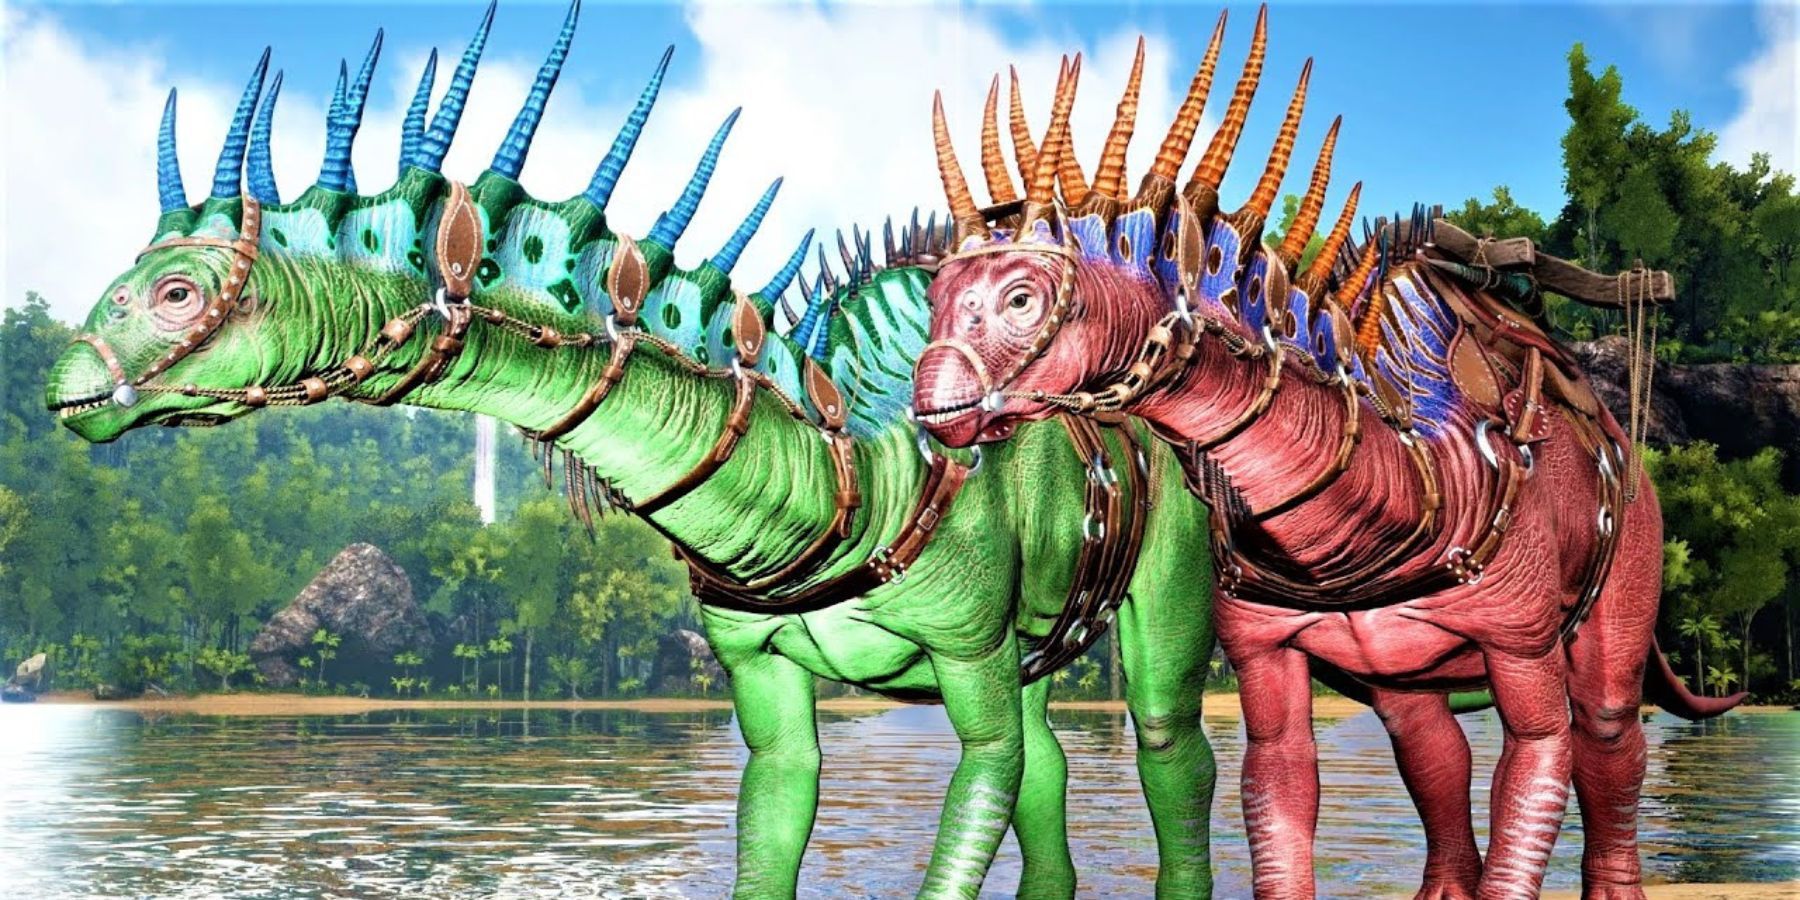 The Amargasaurus colors